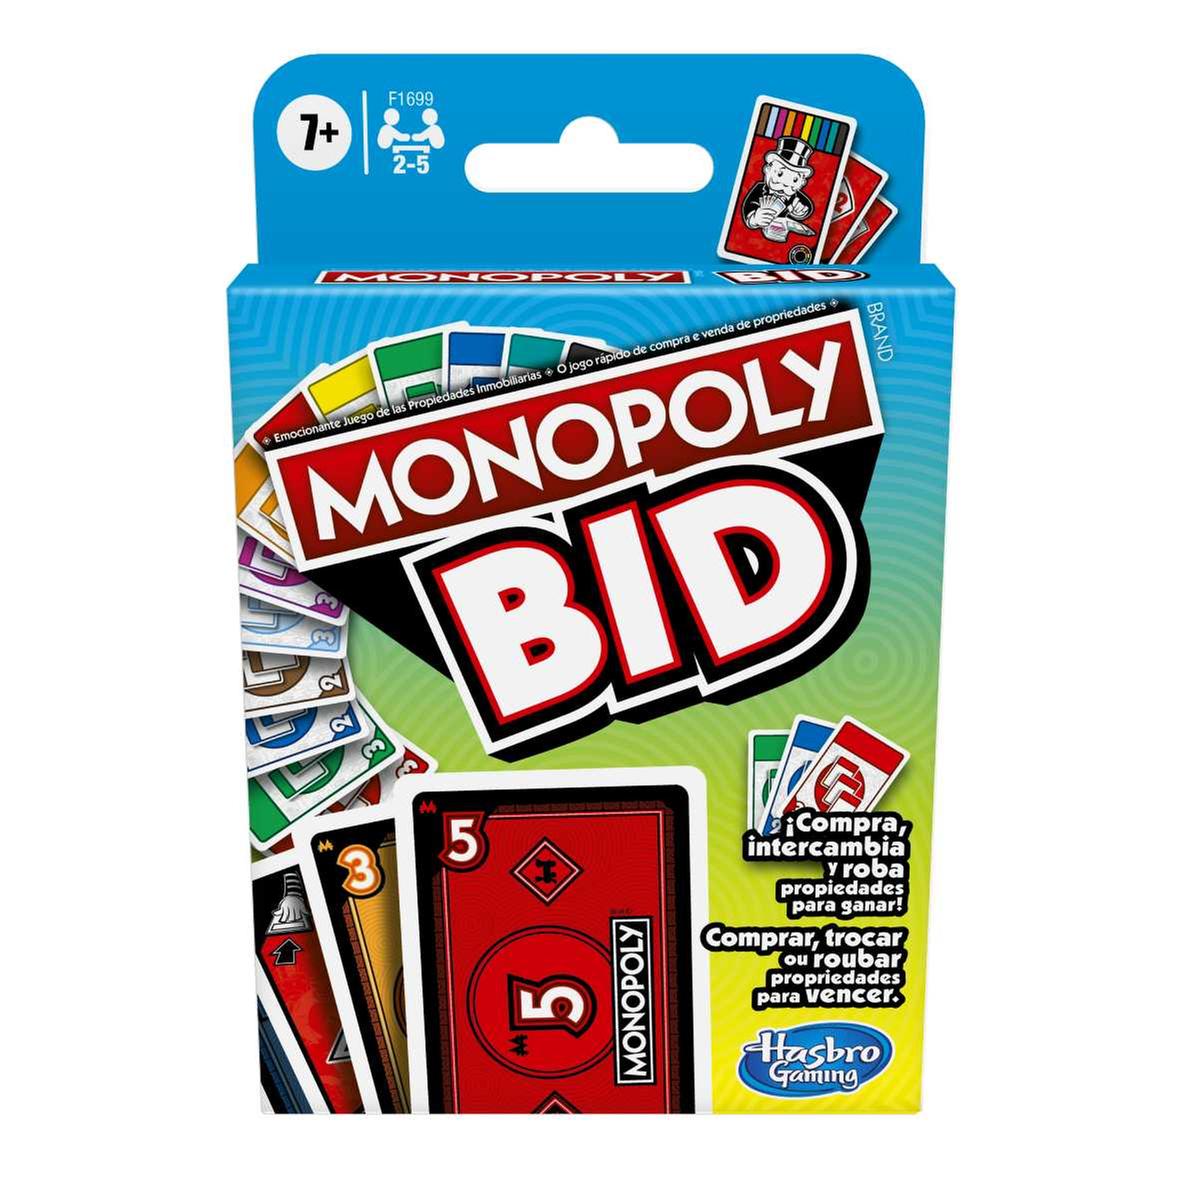 Monopoly - Bid | MONOPOLY | Loja de brinquedos e videojogos Online Toysrus